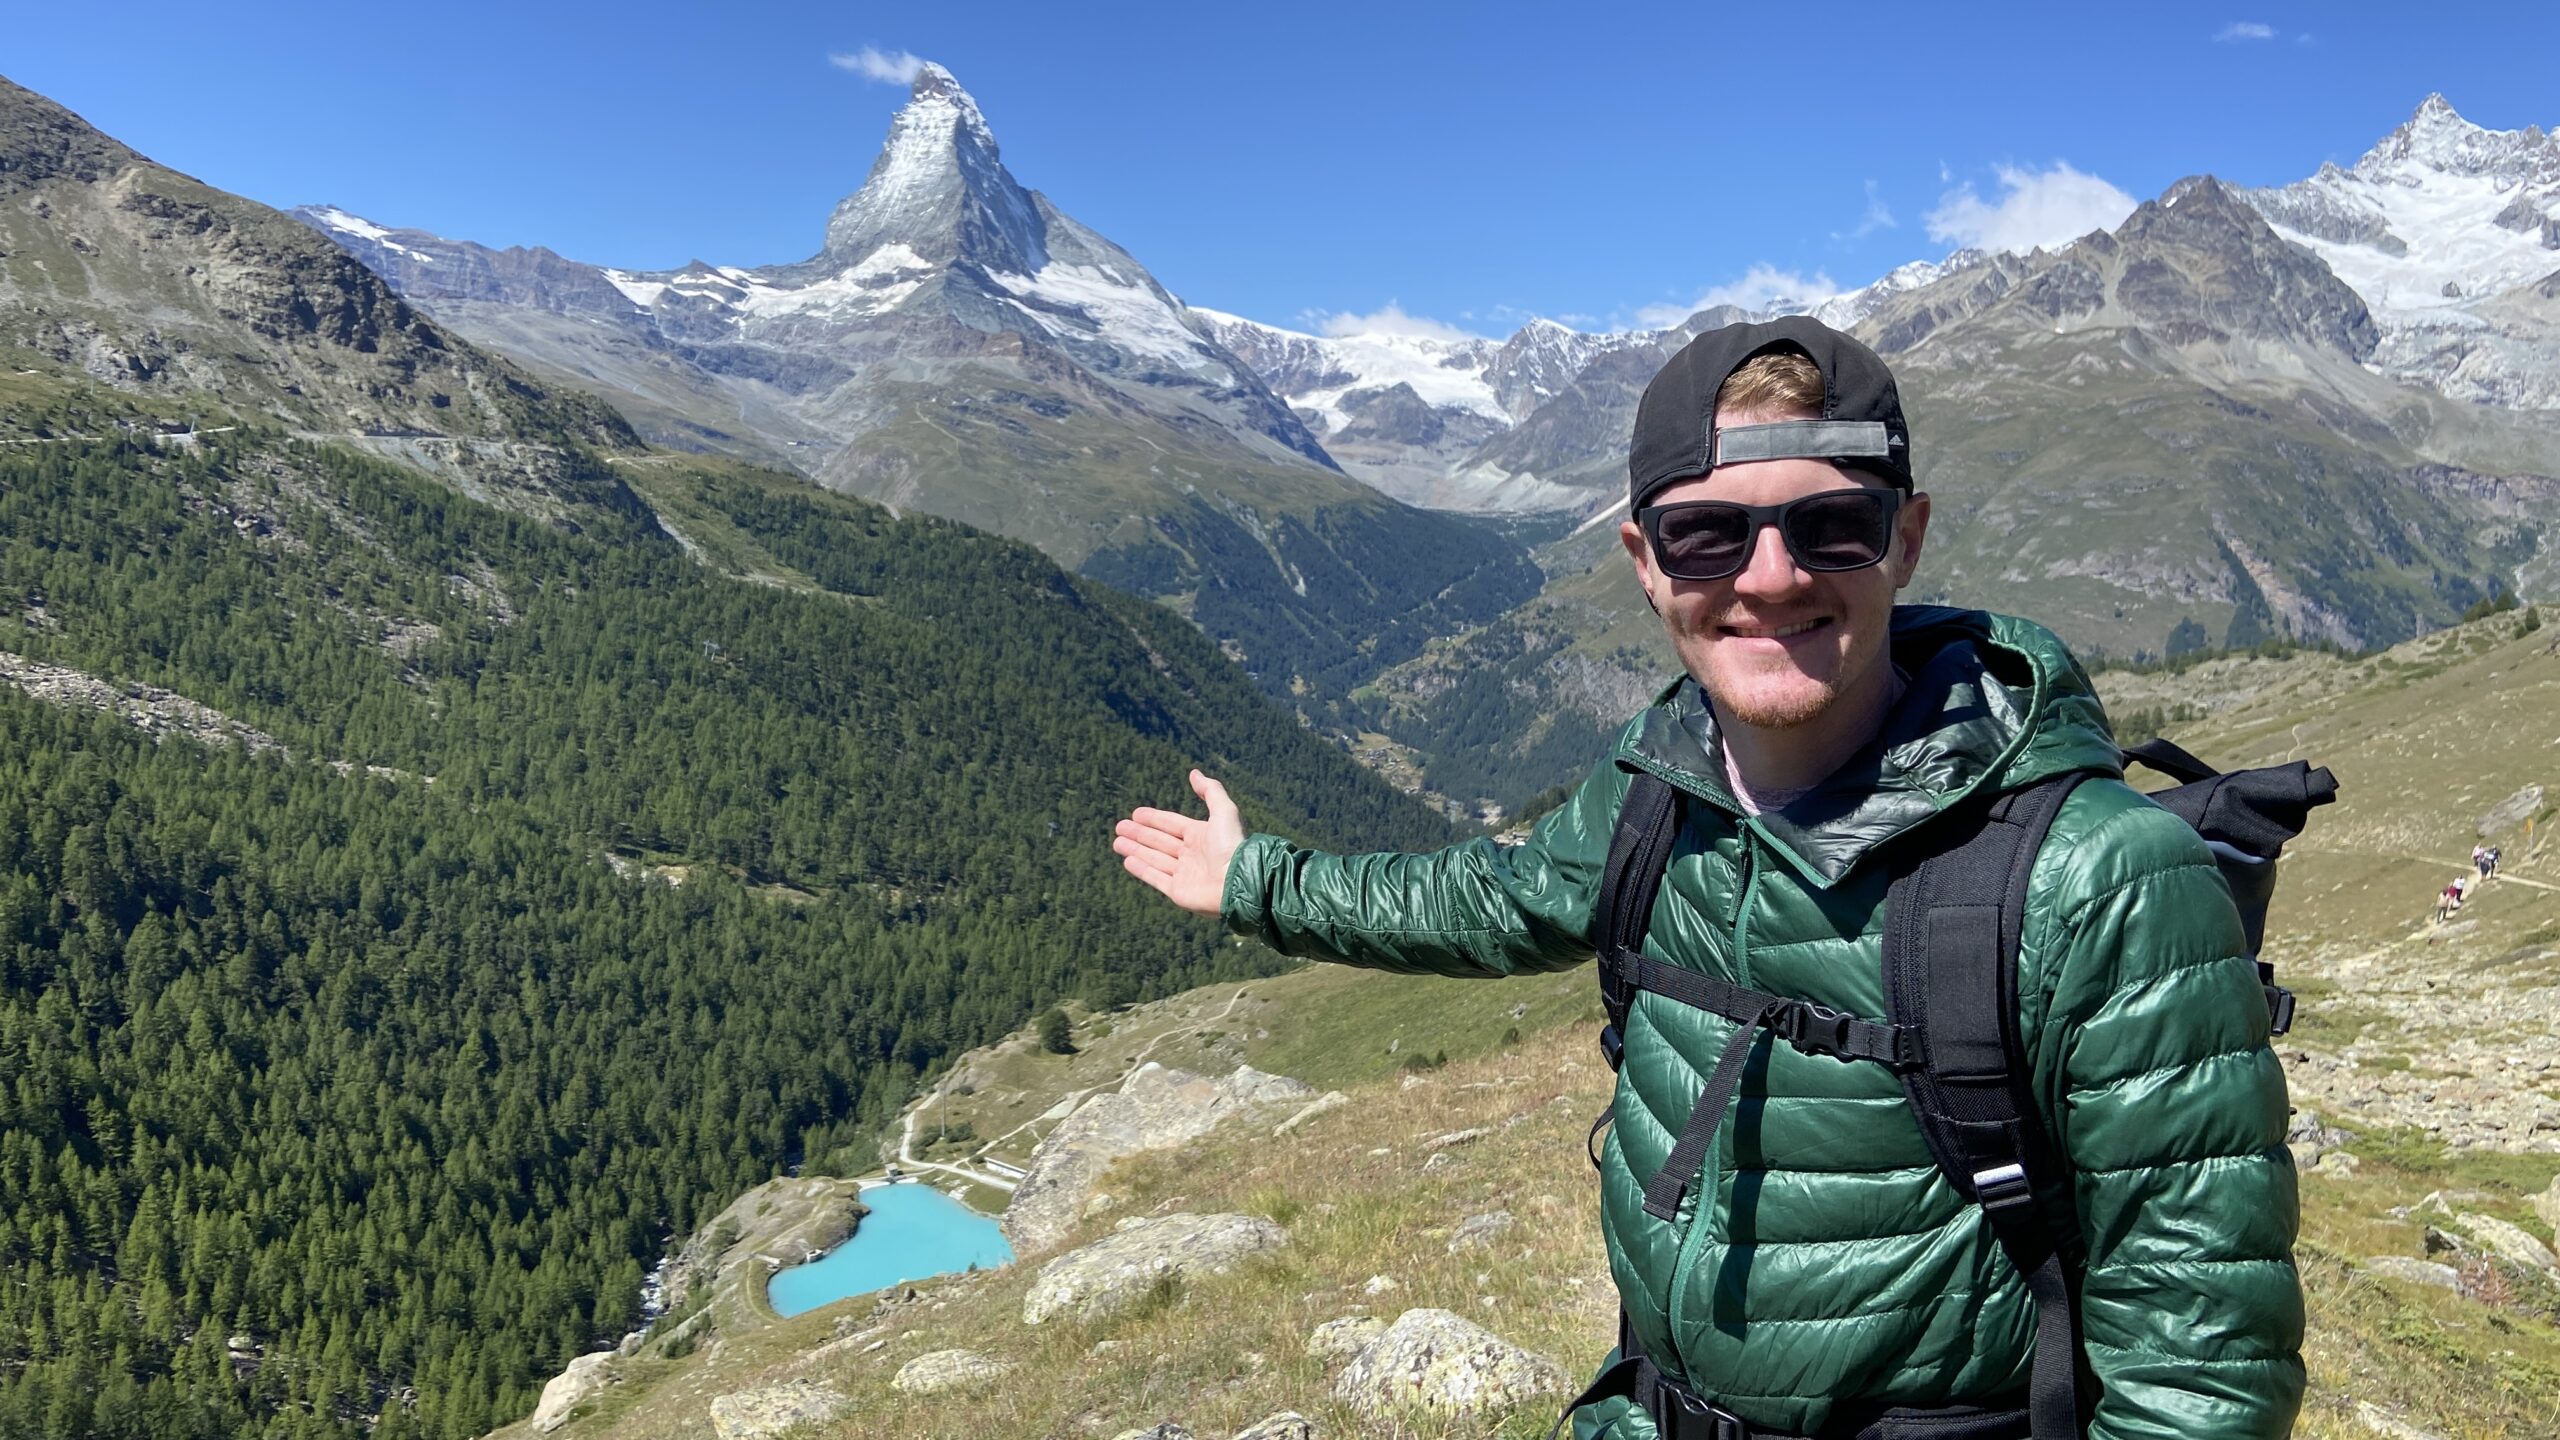 Brett in front of the matterhorn mountain on the 5 lakes trail zermatt